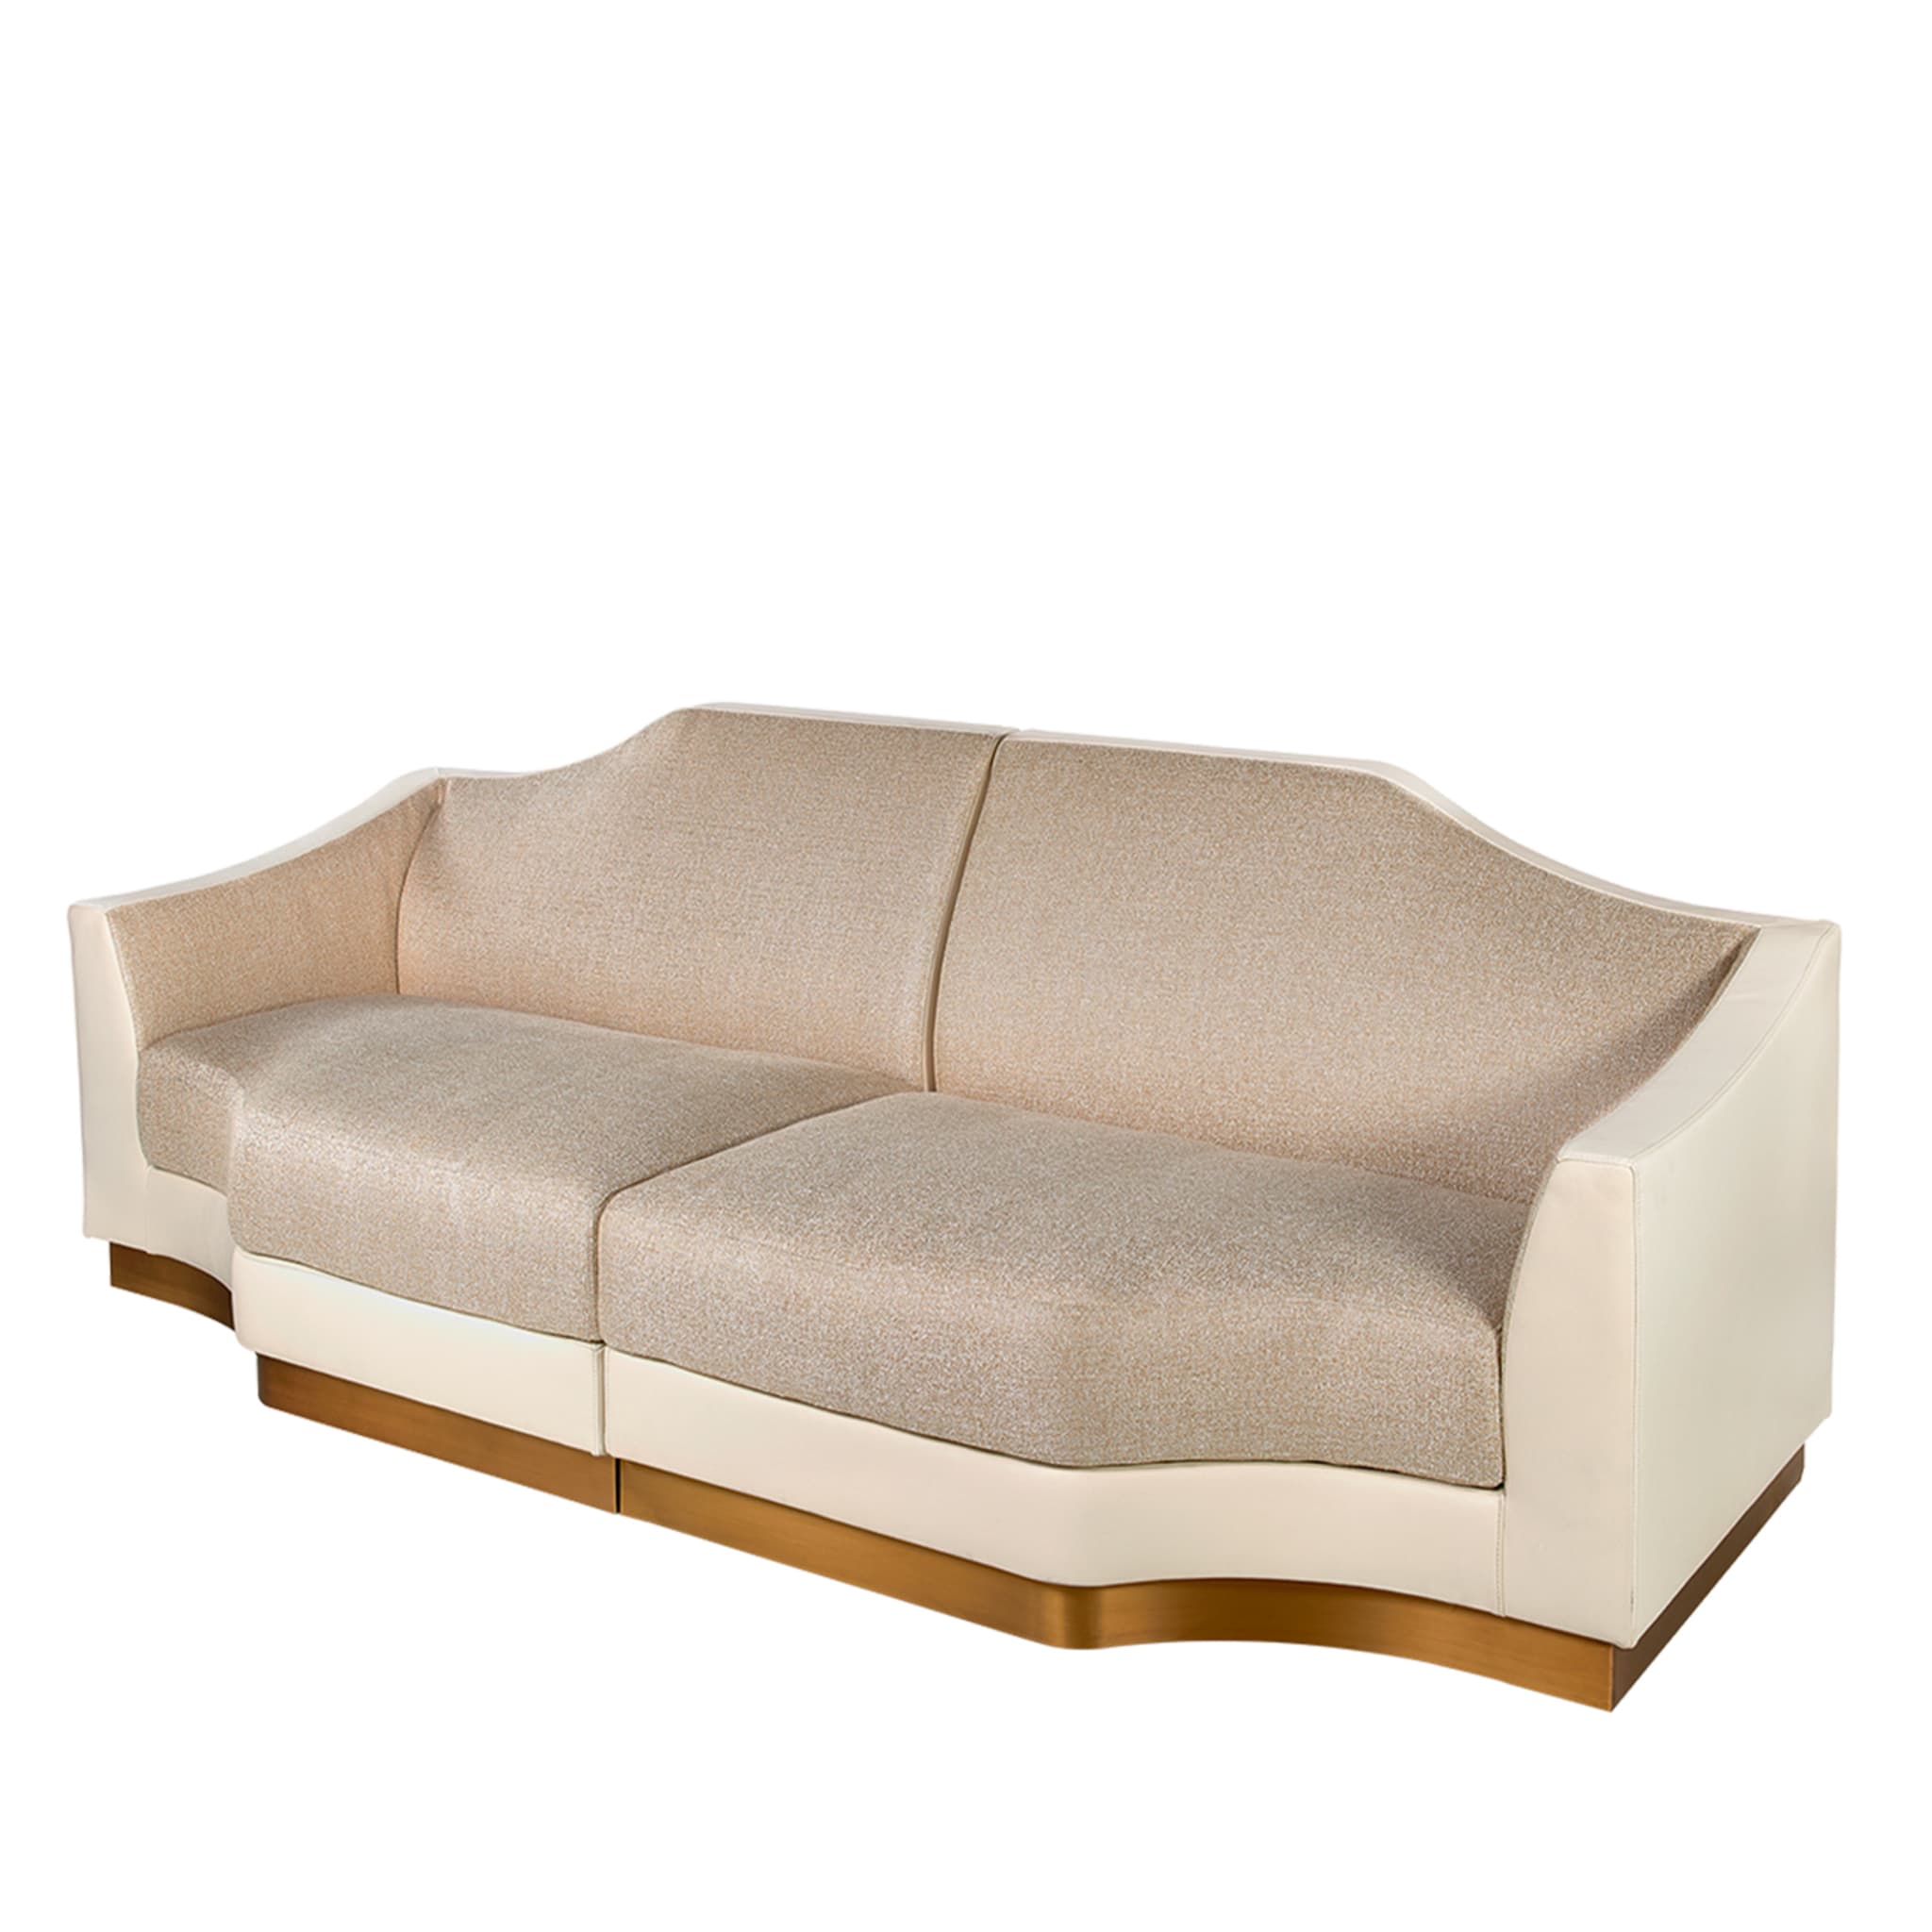 Borgia Modular Sofa #2 - Alternative view 1